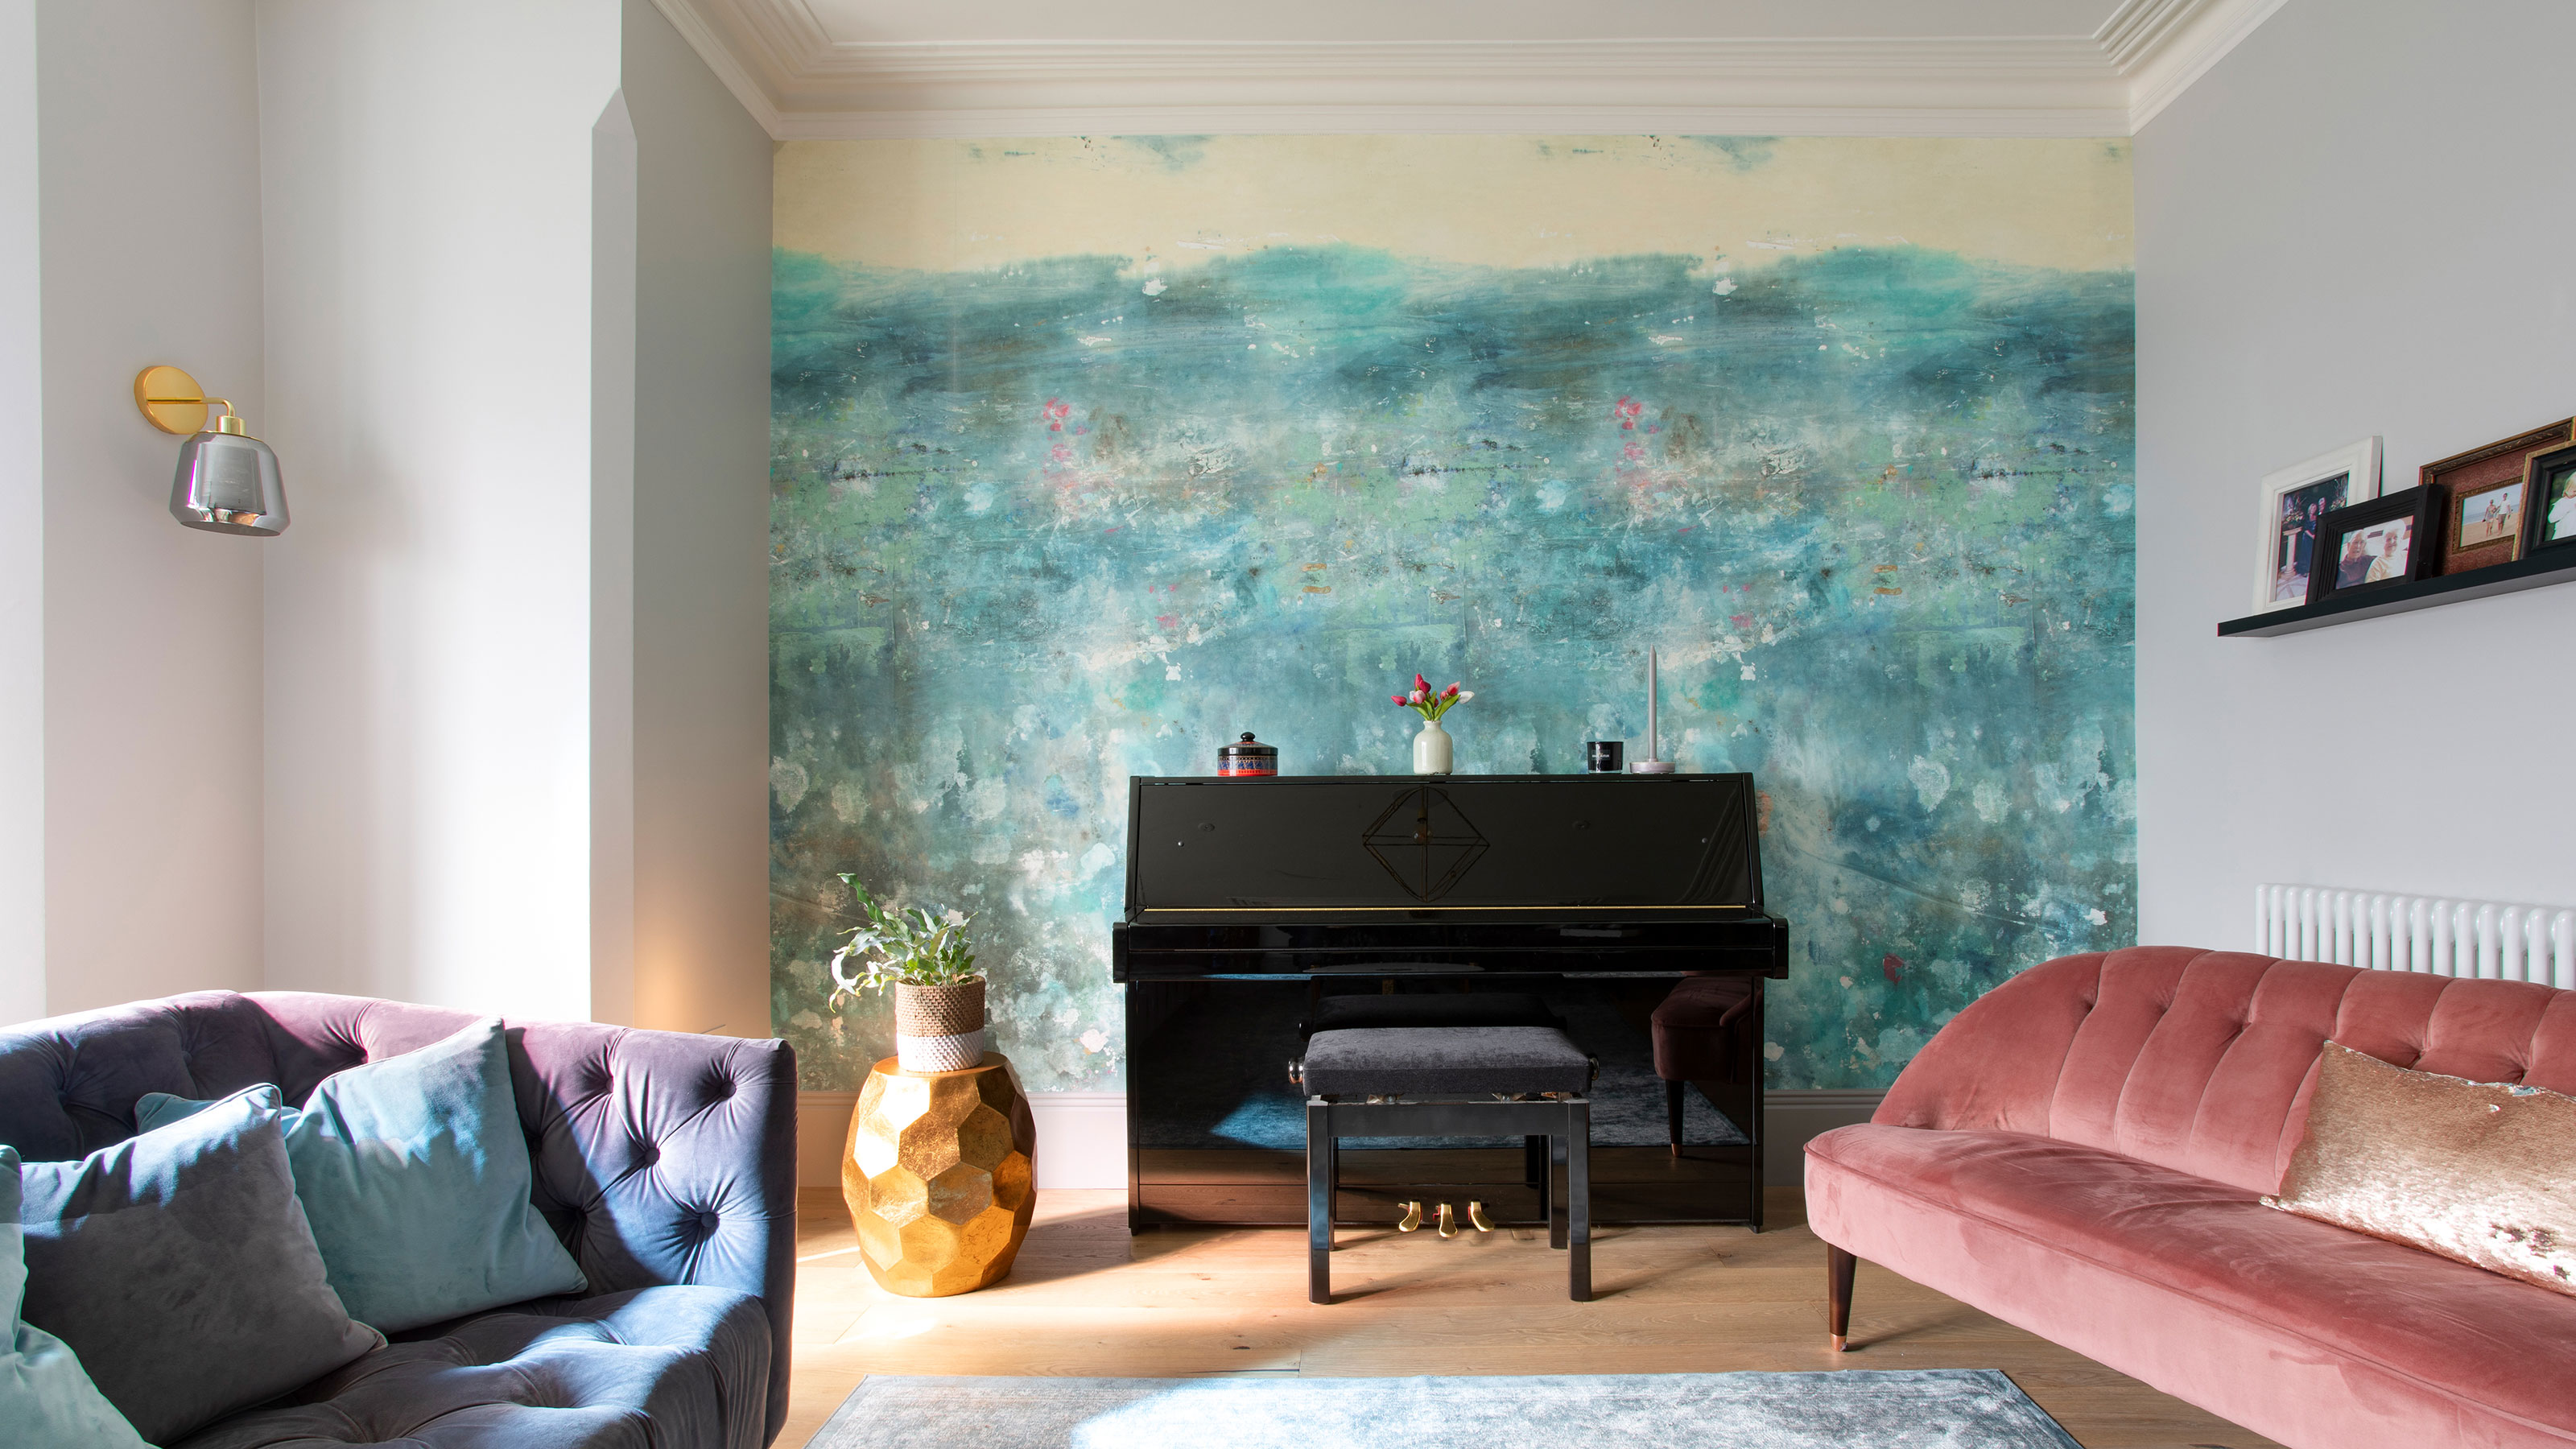 Wallpaper Ideas for the Living Room  Living Room Wallpaper Ideas 2021